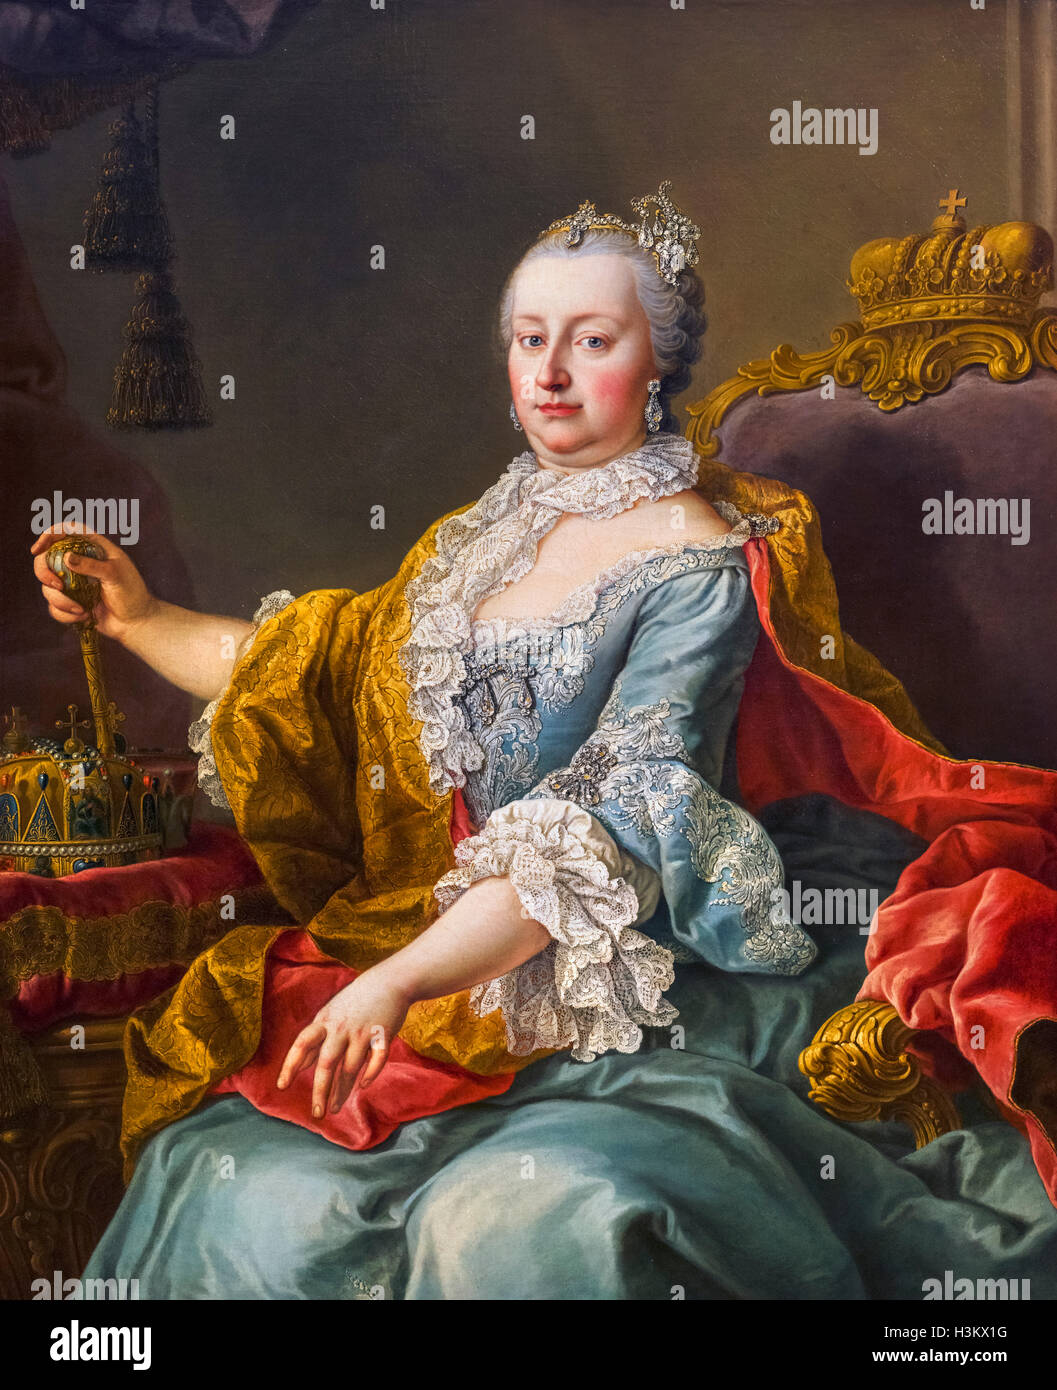 The Empress Maria Theresa (Maria Theresa Walburga Amalia Christina - 1717-1780) by Martin van Meytens, oil on canvas, 1759. Stock Photo